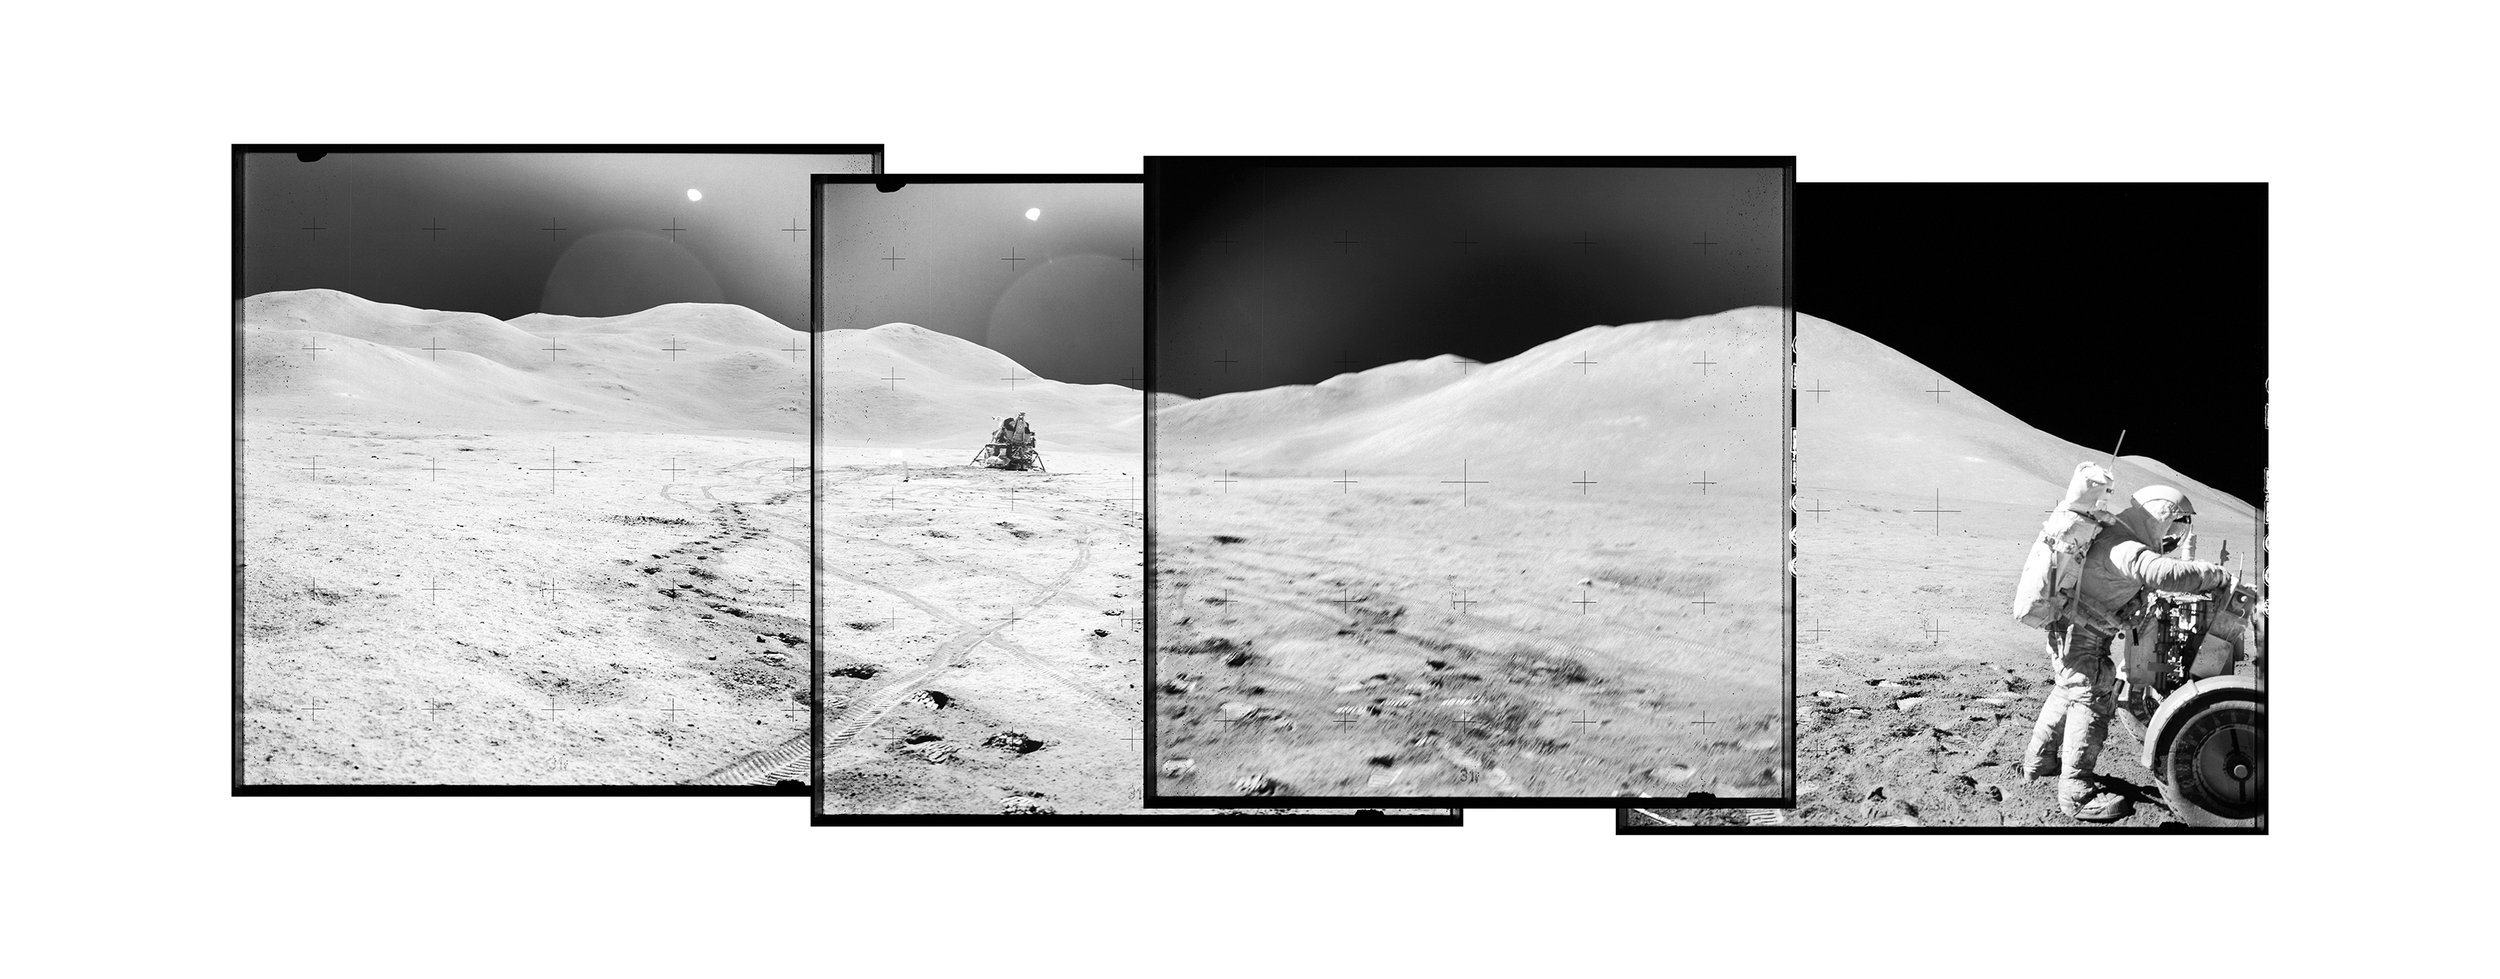  Apennine Mountains, Lunar Module and LRV (Lunar Roving Vehicle) (145x60)Apollo 15 Magazine 82/SS - NASA photographs 1971 